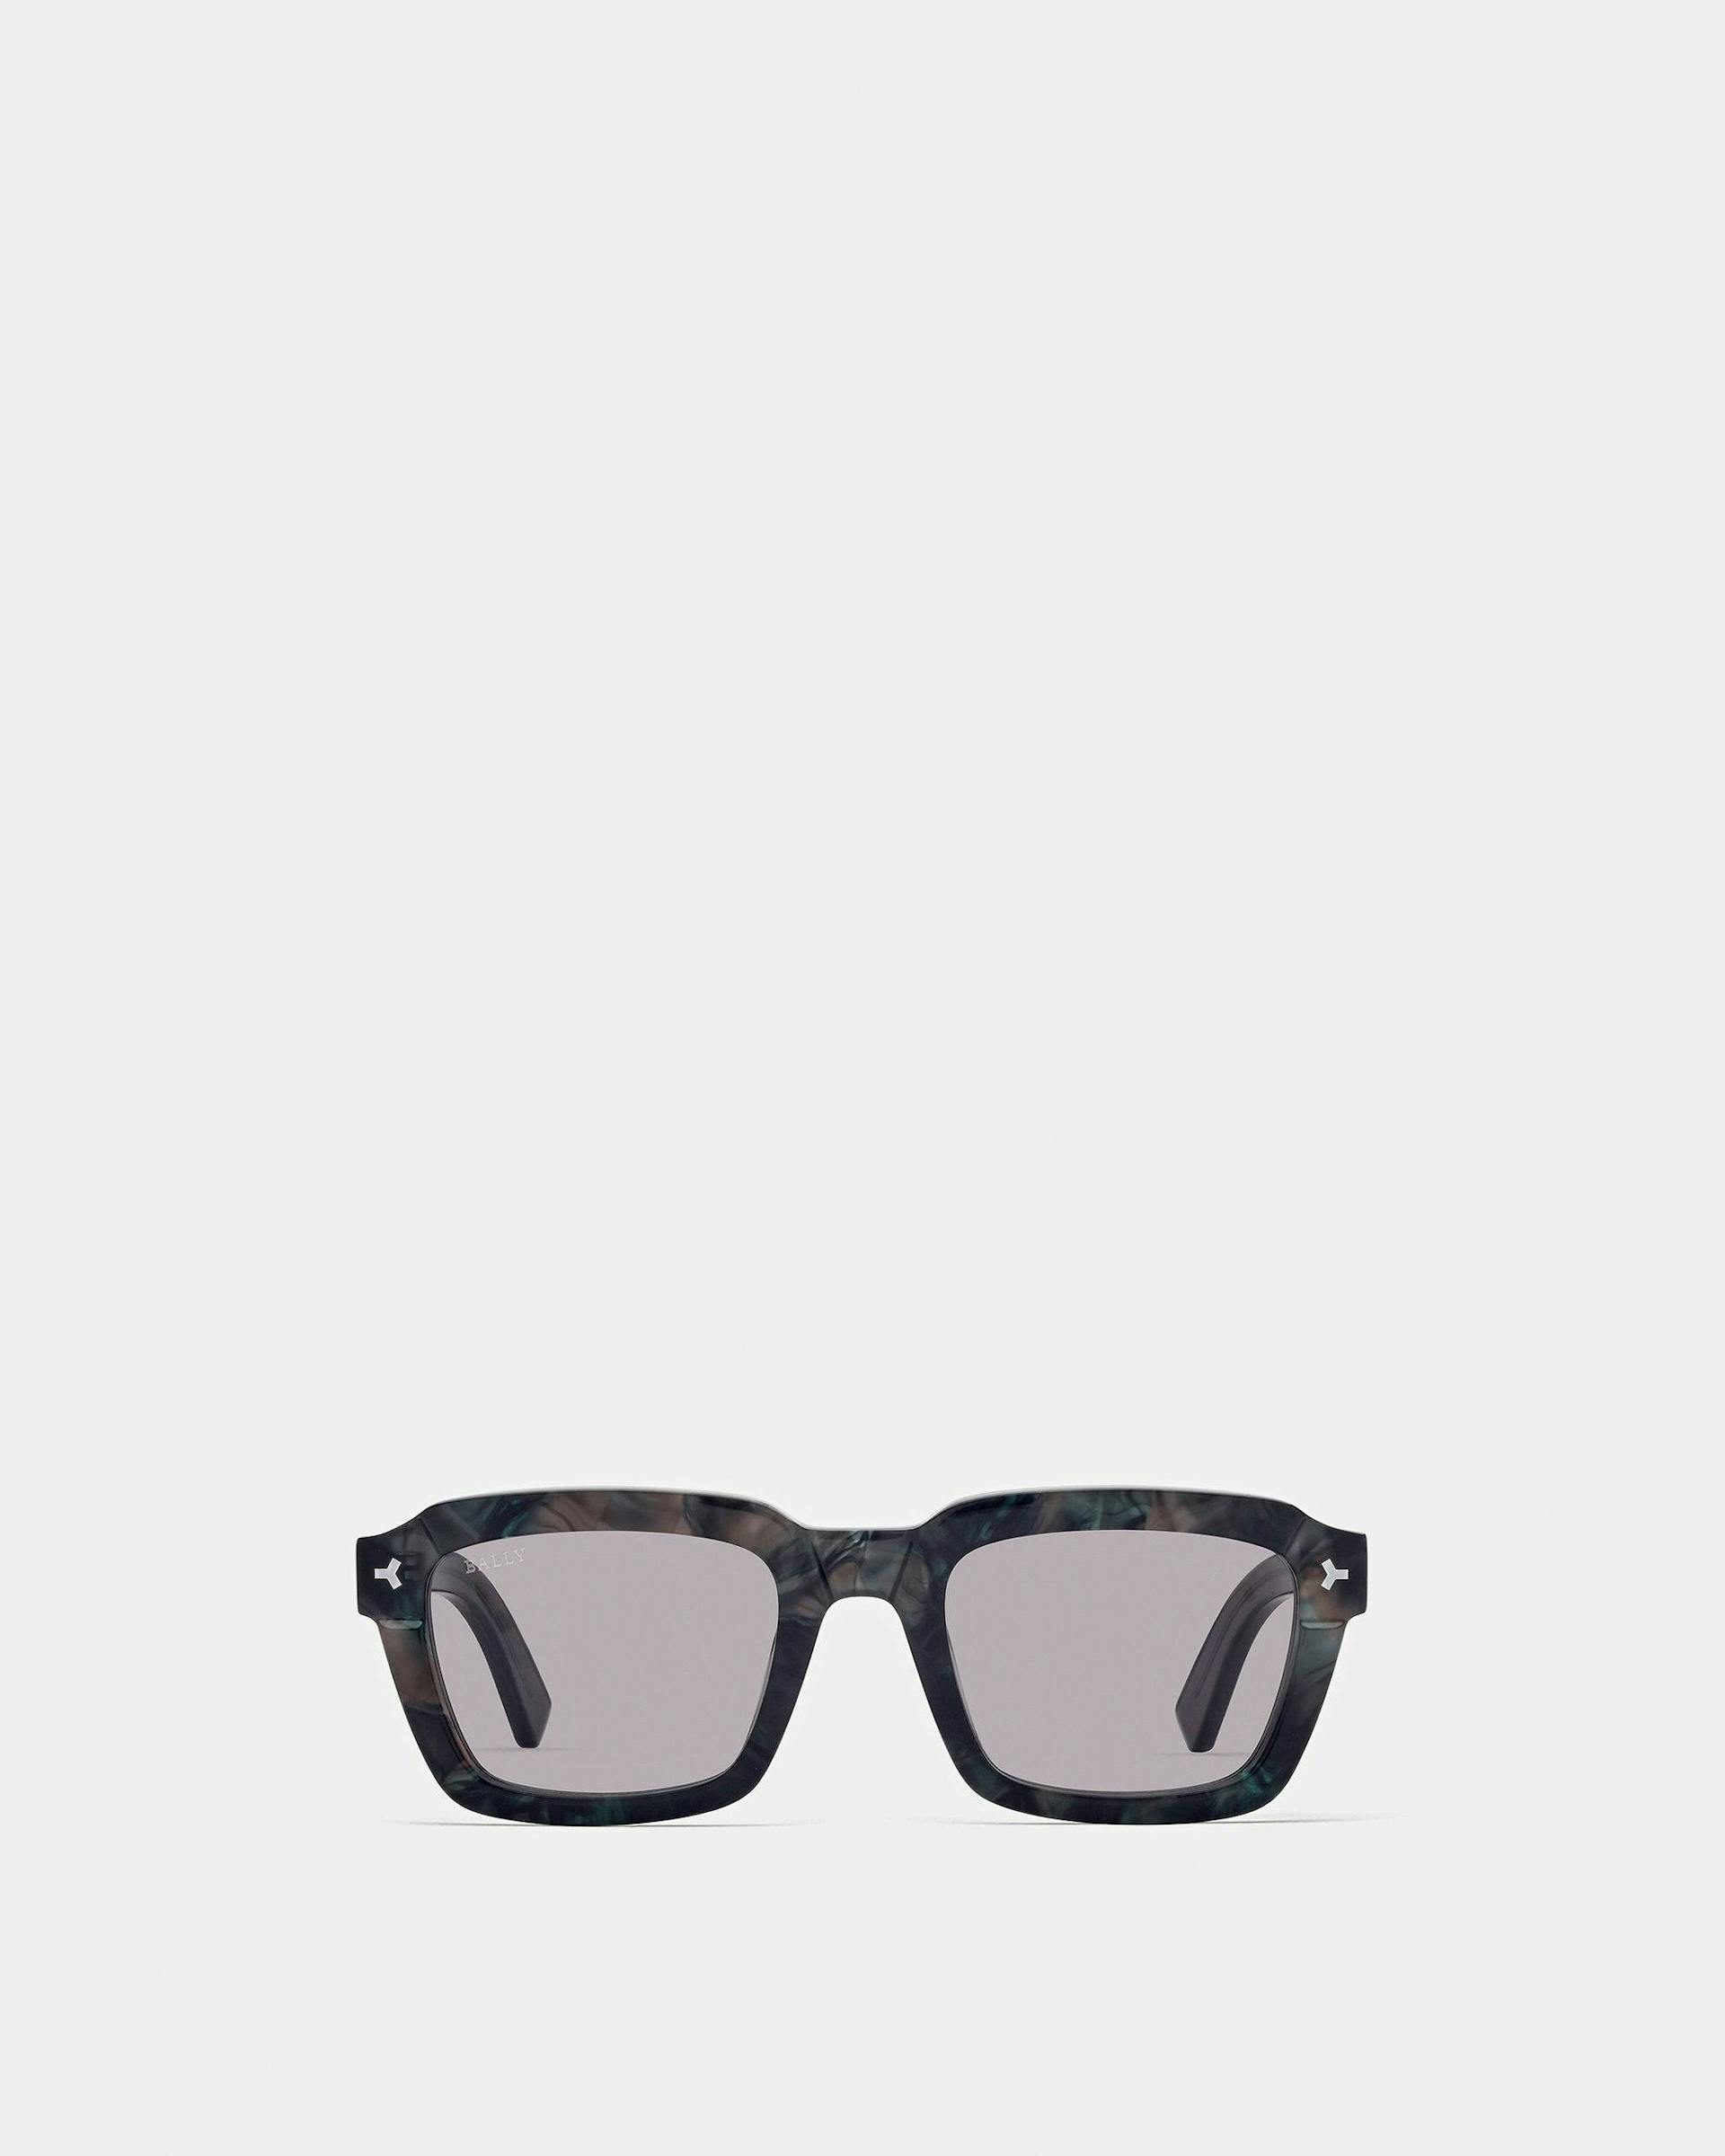 Nicholas Rectangular Full Rim Sunglasses In Black And Gray Plastic - Men's - Bally - 01